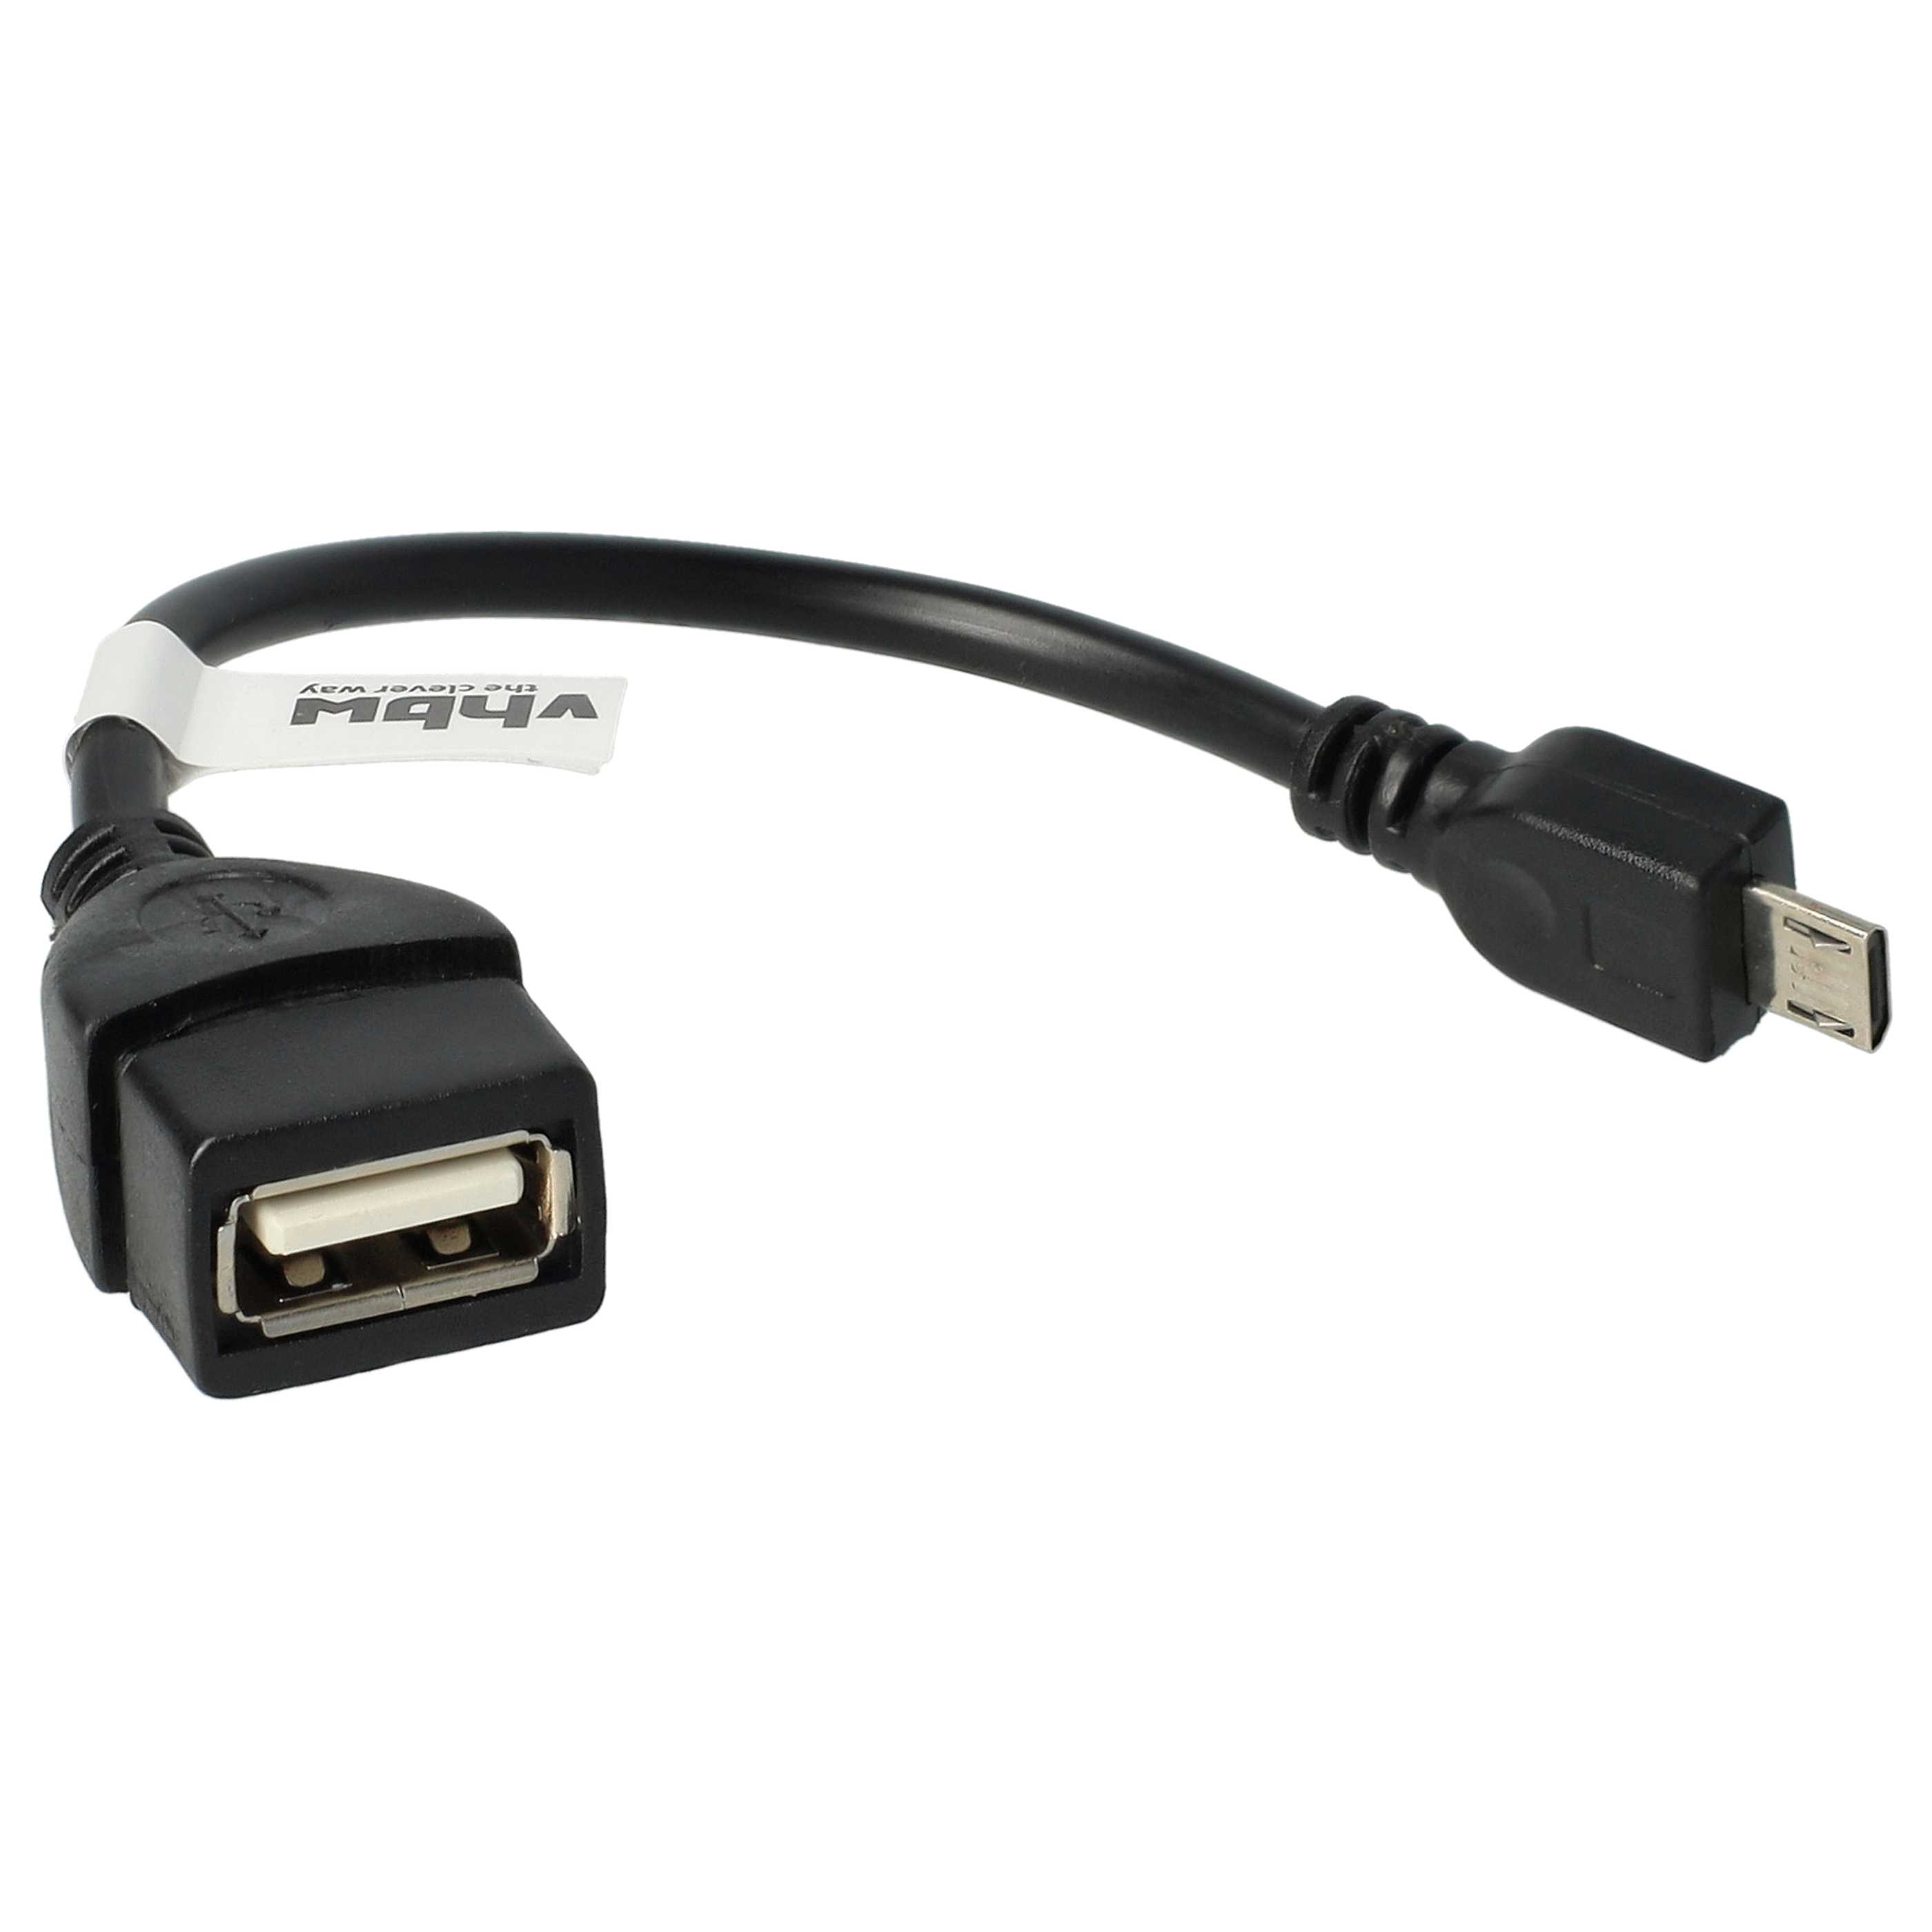 Adattatore OTG daMicro-USB a USB (femmina) per smartphone, tablet, laptop